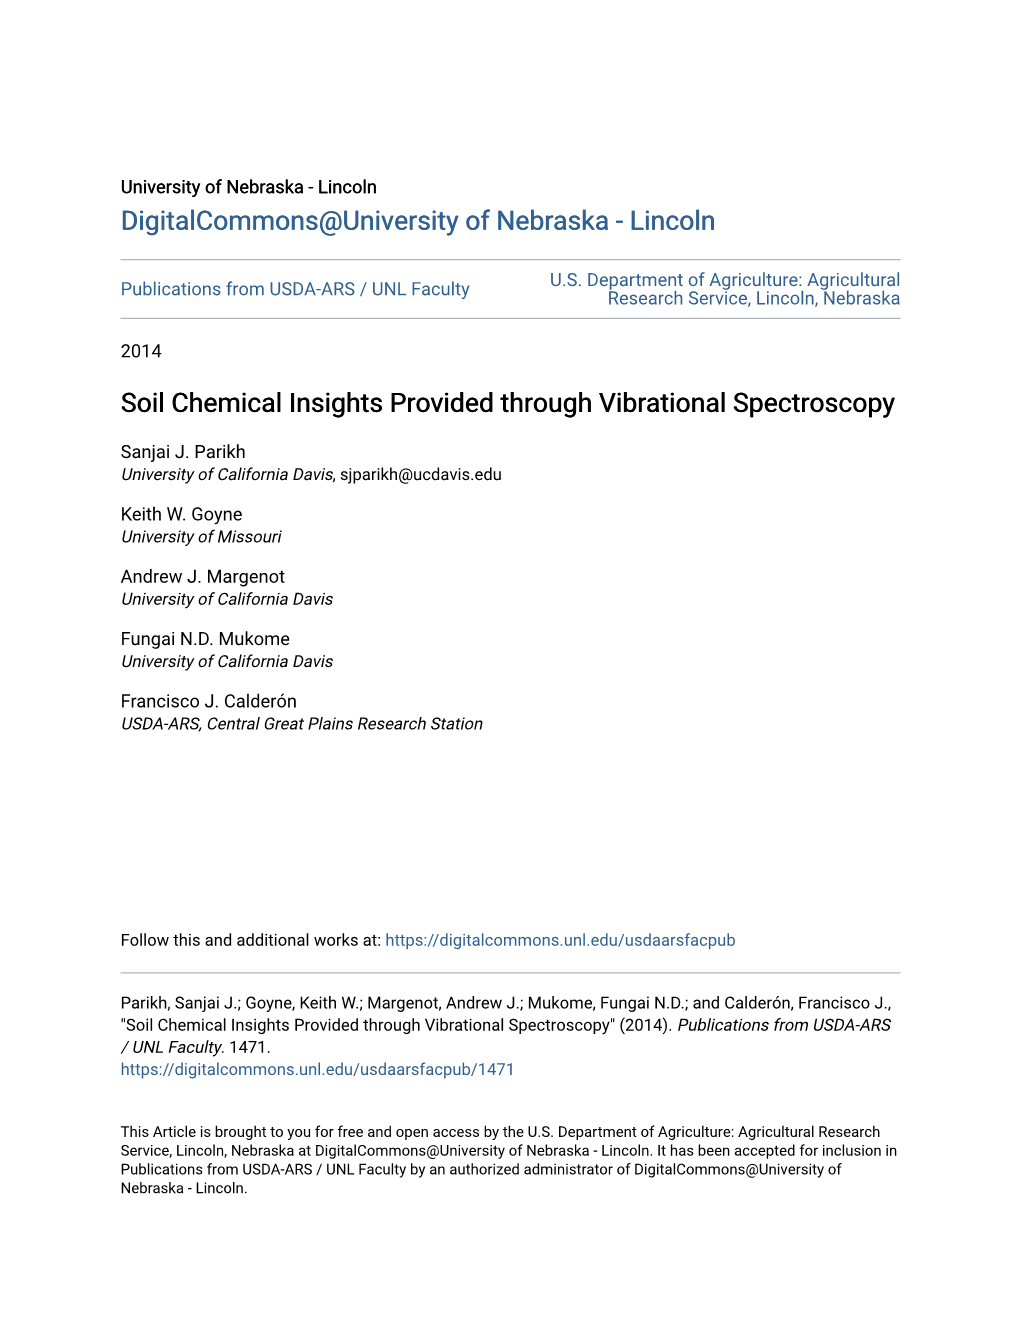 Soil Chemical Insights Provided Through Vibrational Spectroscopy